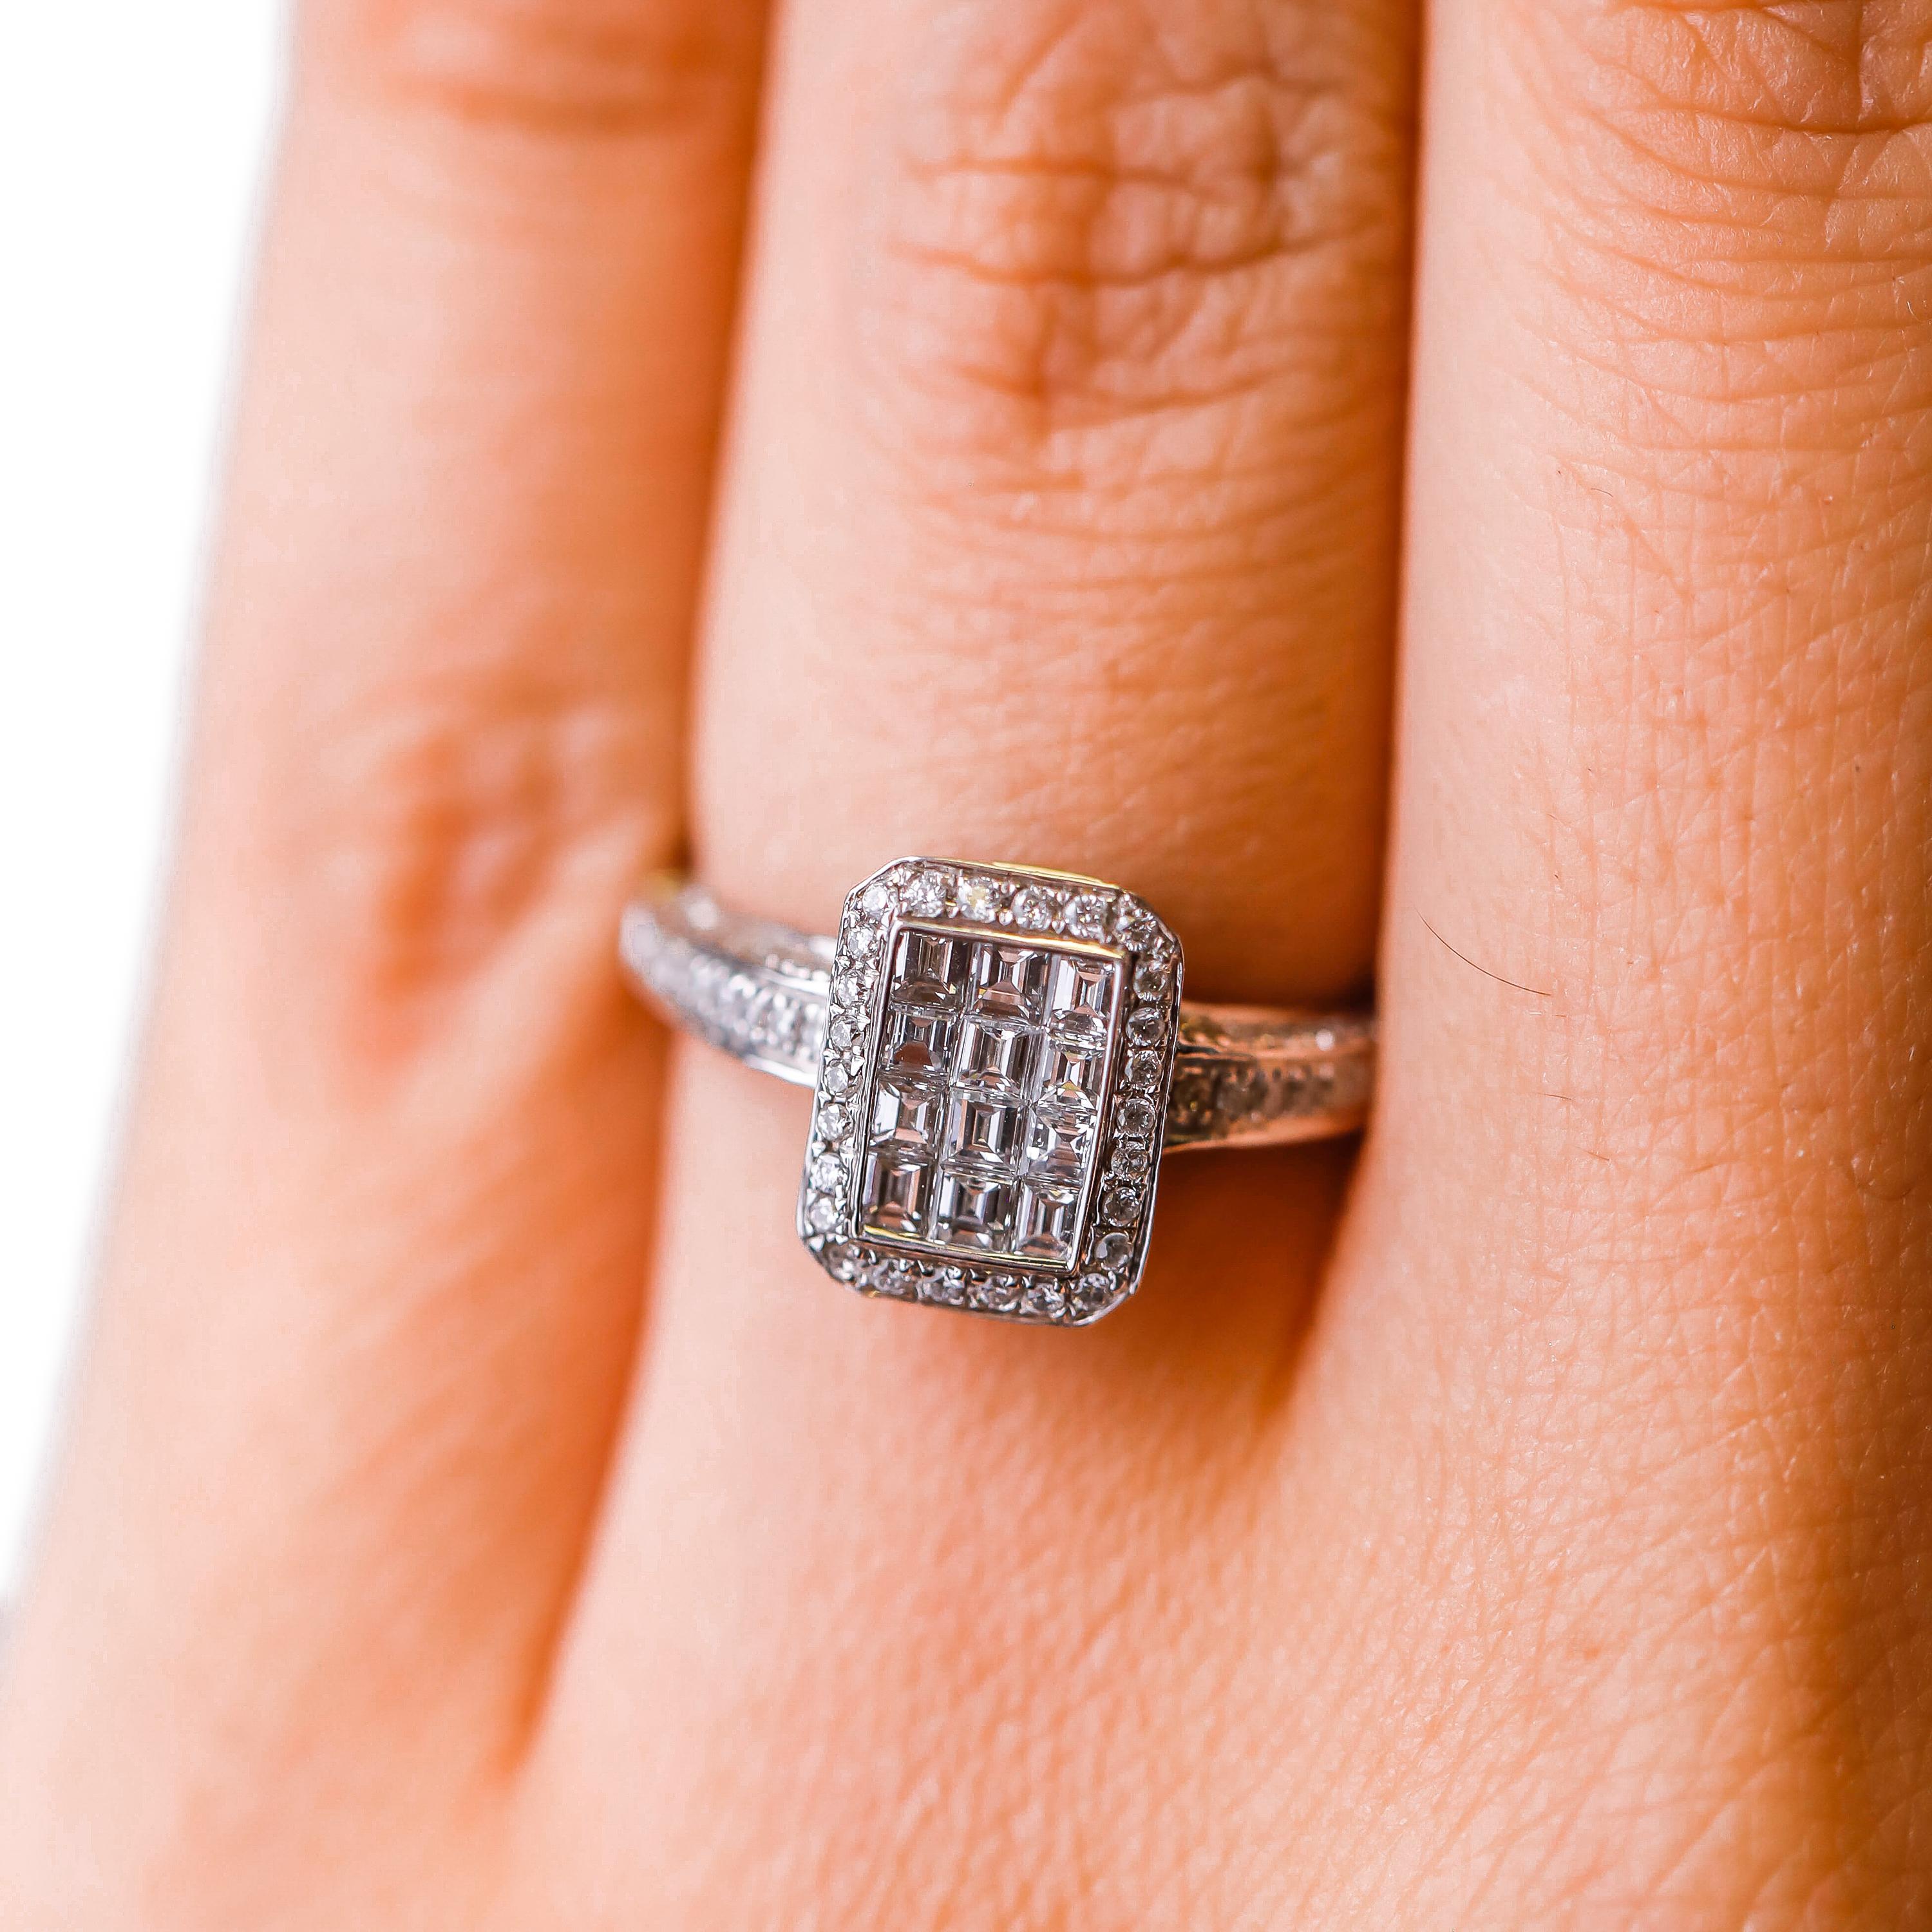 Gregg Ruth 18k White Gold 1.0 Carat Princess Cut Diamond Engagement Ring Sz 6.5 For Sale 3